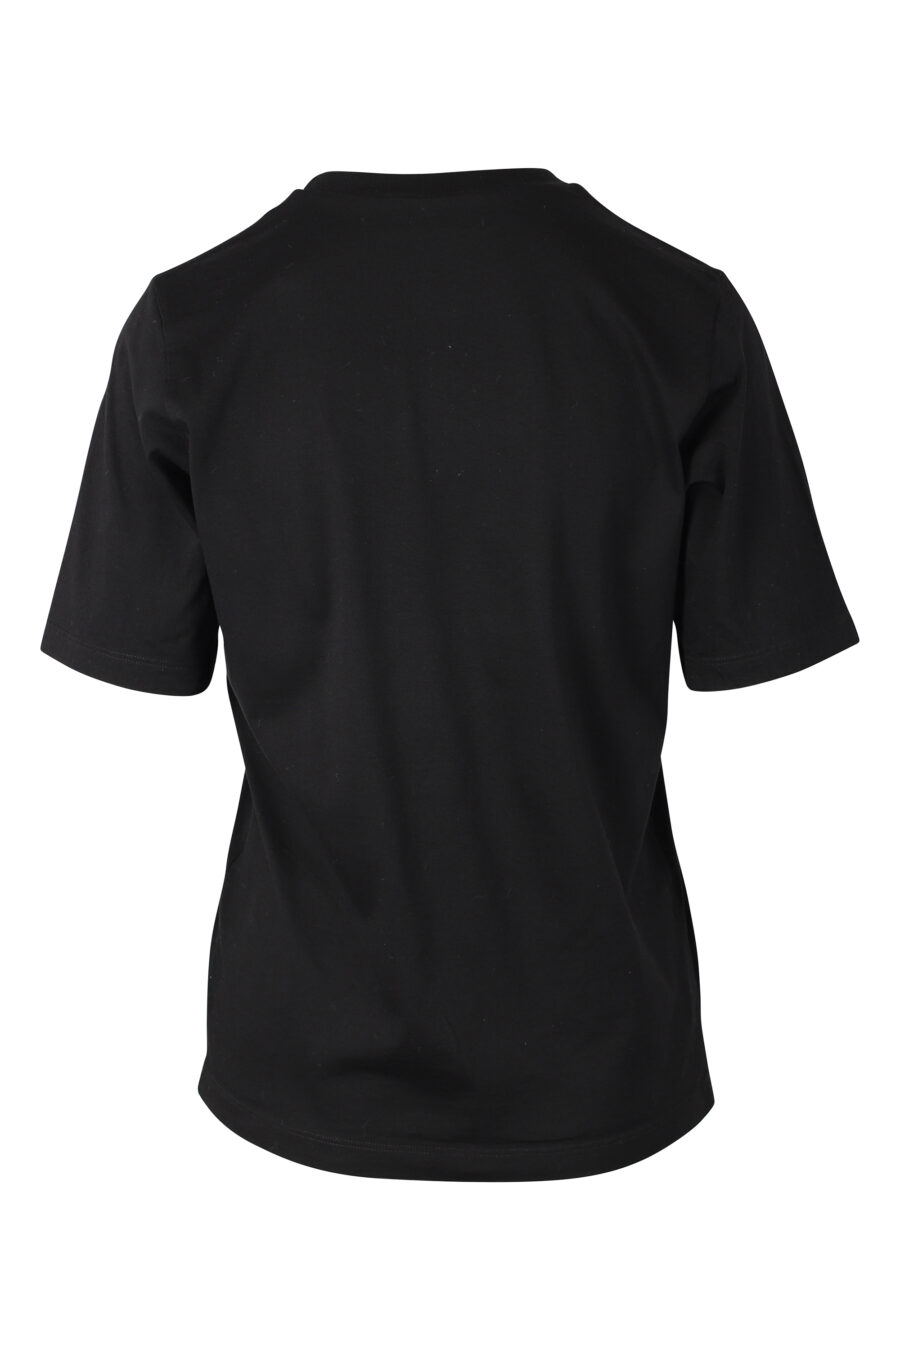 Camiseta negra con doble logo "icon sunset" - IMG 9784